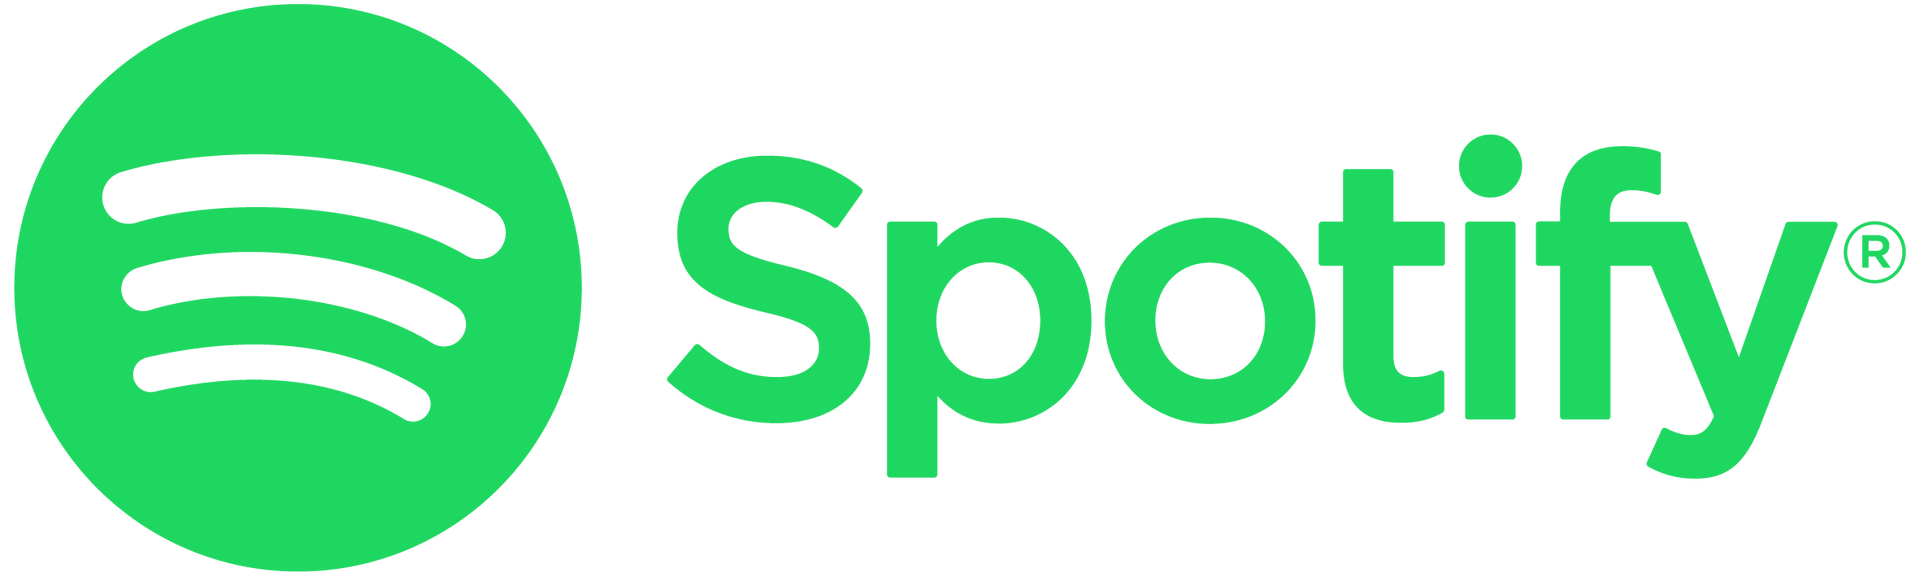 a green spotify logo on a white background